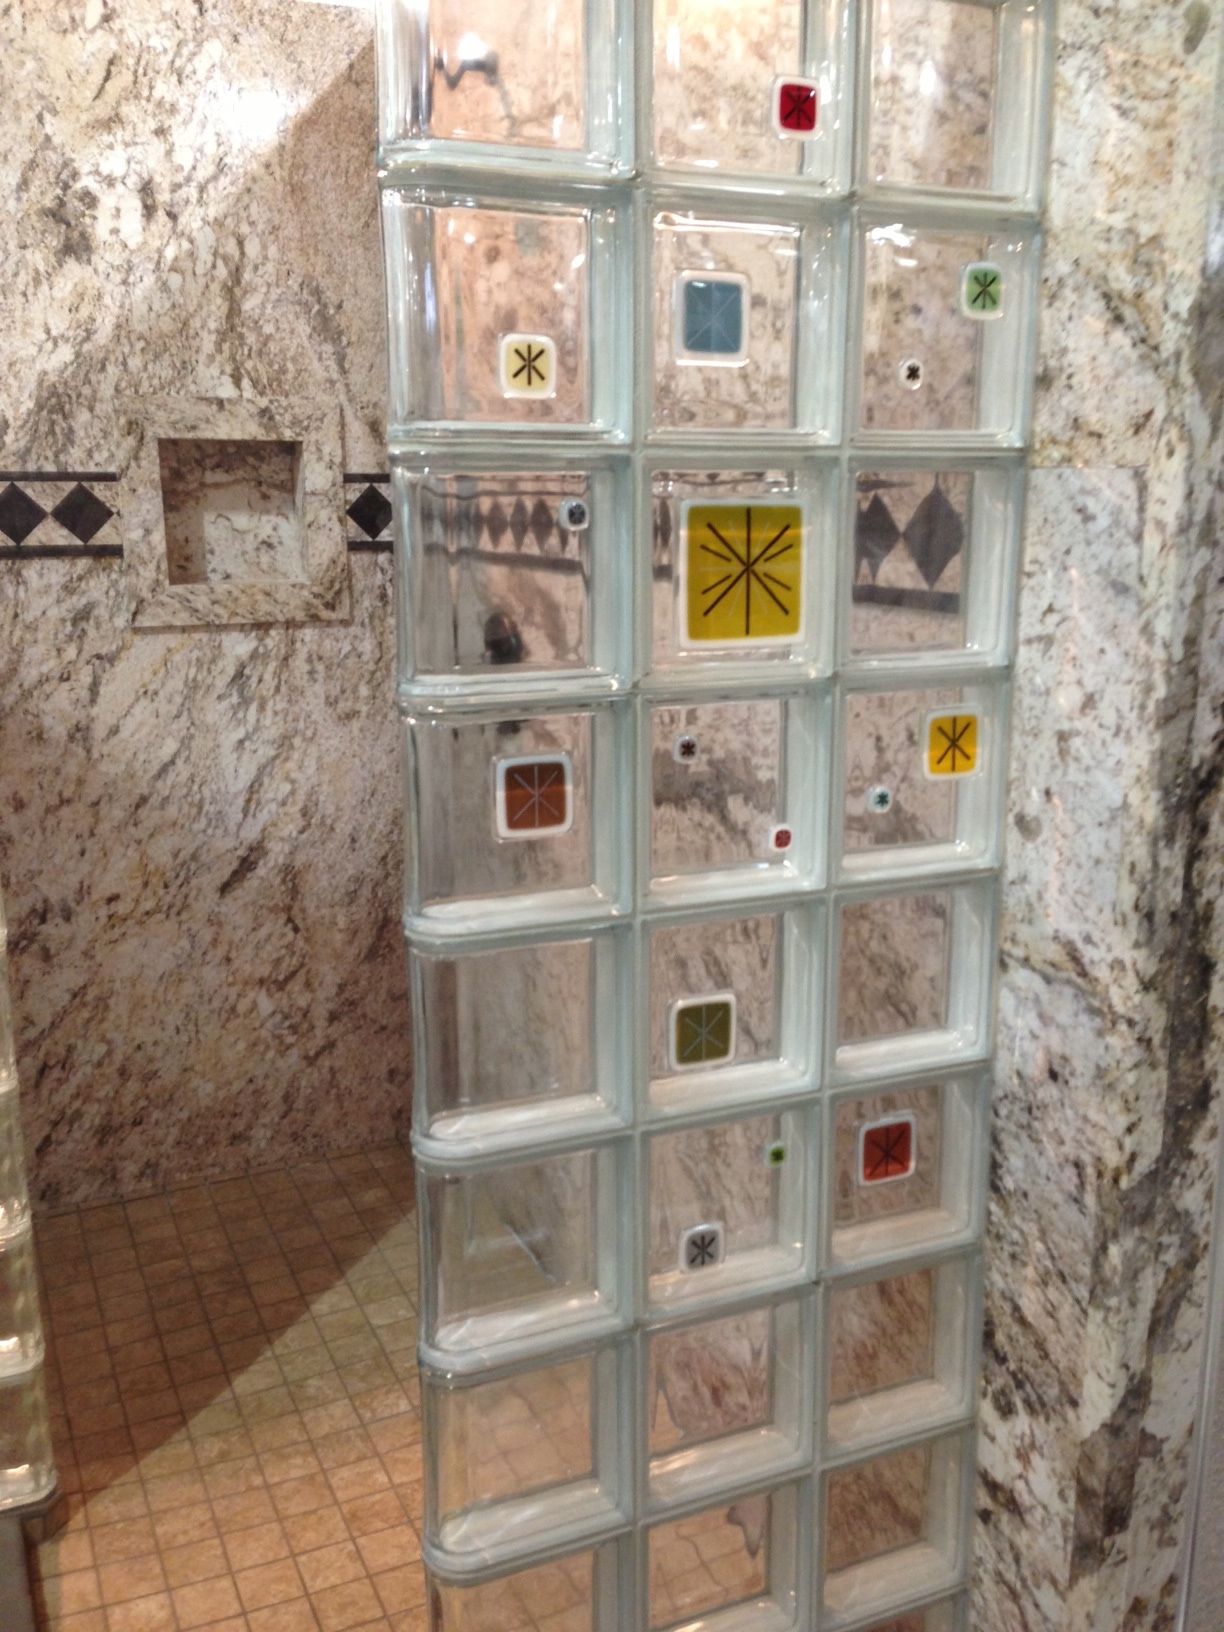 New Colorful Glass Tile Block Showers, Glass Block Tiles Bathroom